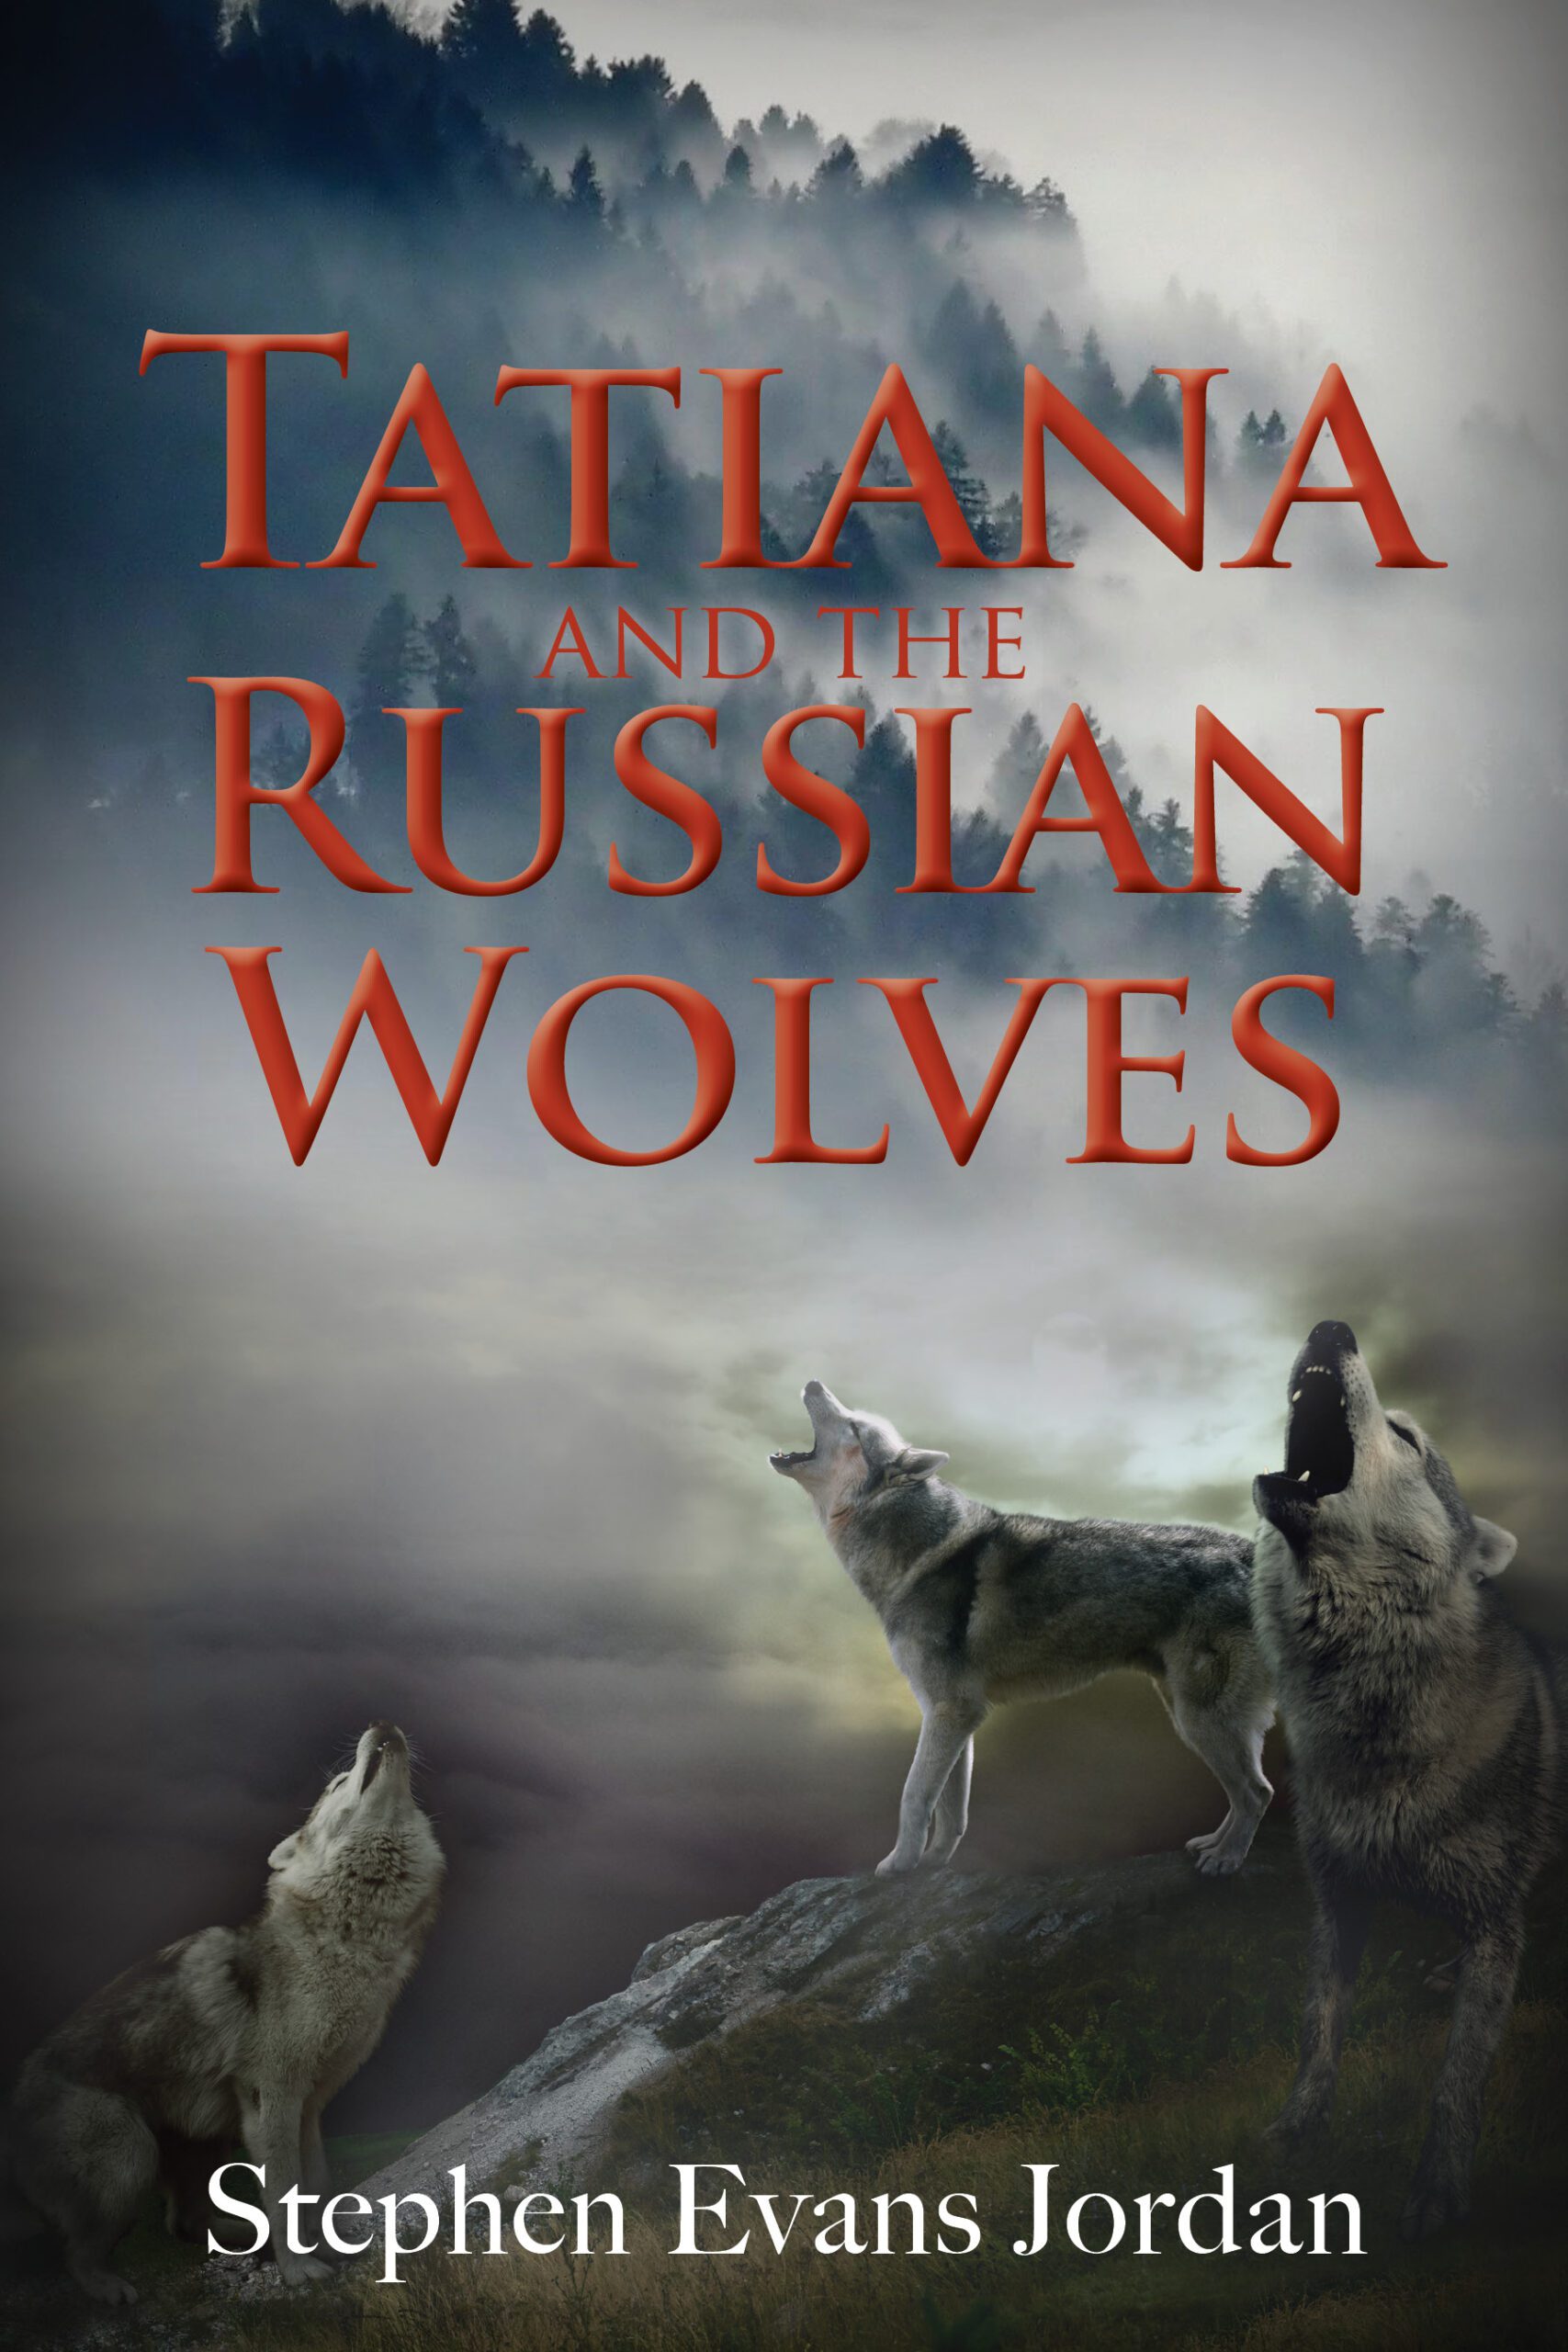 Tatiana-and-the-Russian-Wolves-stephen-evans-jordan-book-publicity-dallas